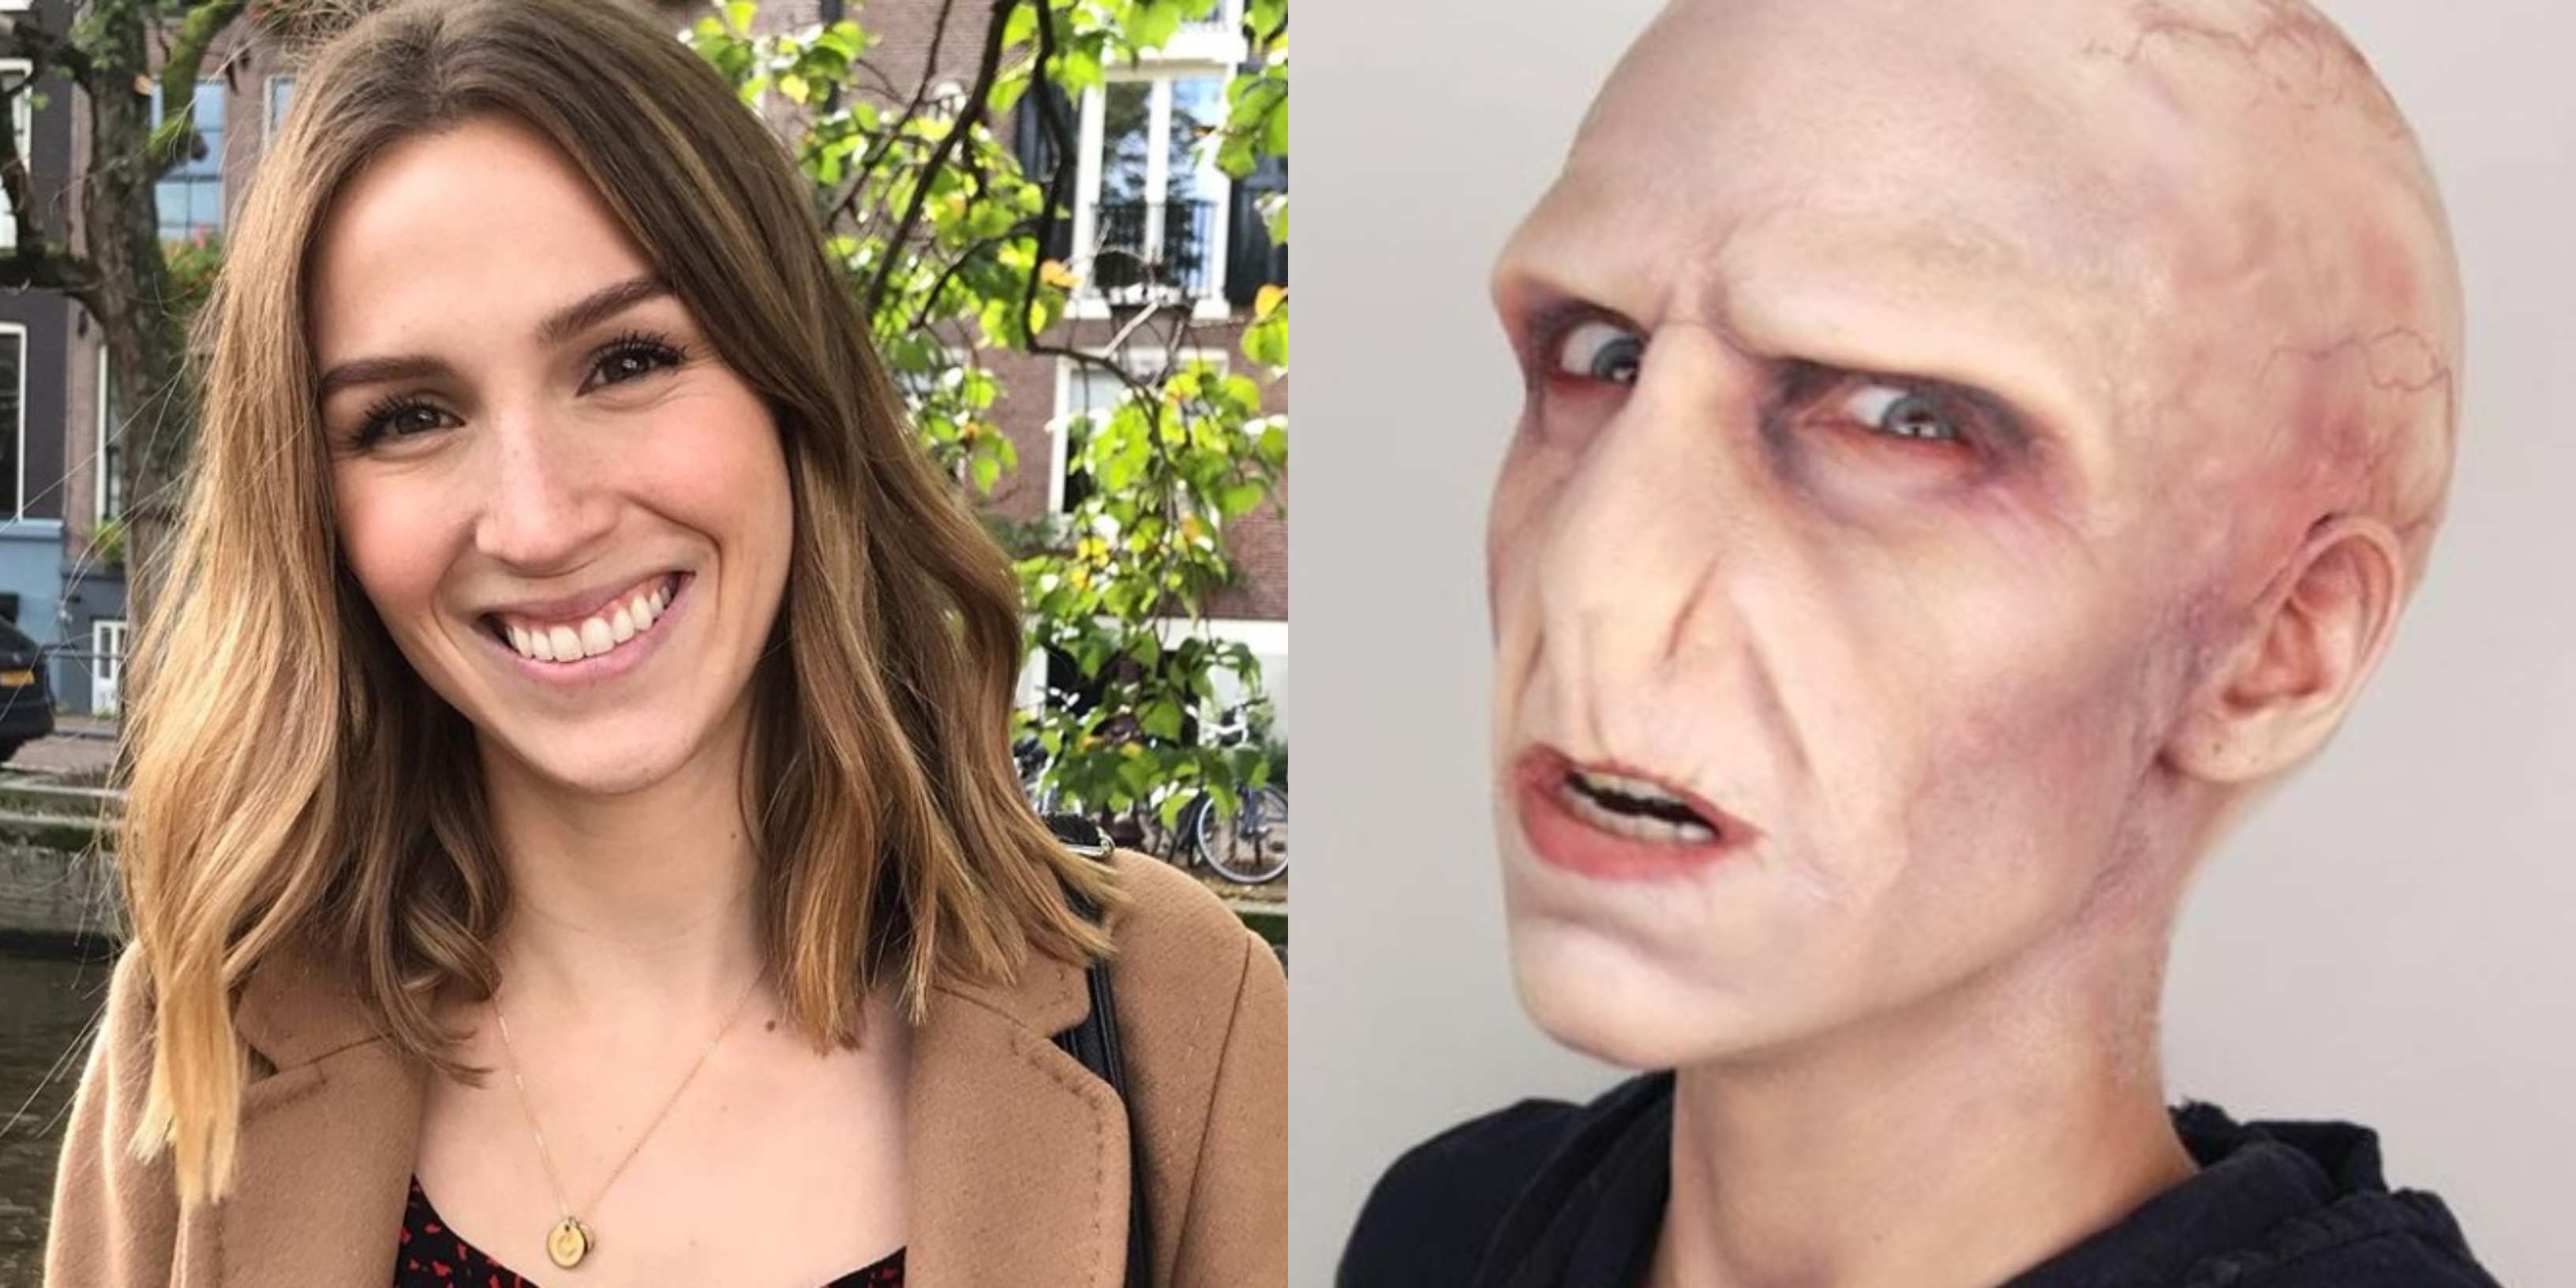 WATCH: Makeup artist transforms into Voldemort Harry Potter - Dublin's FM104